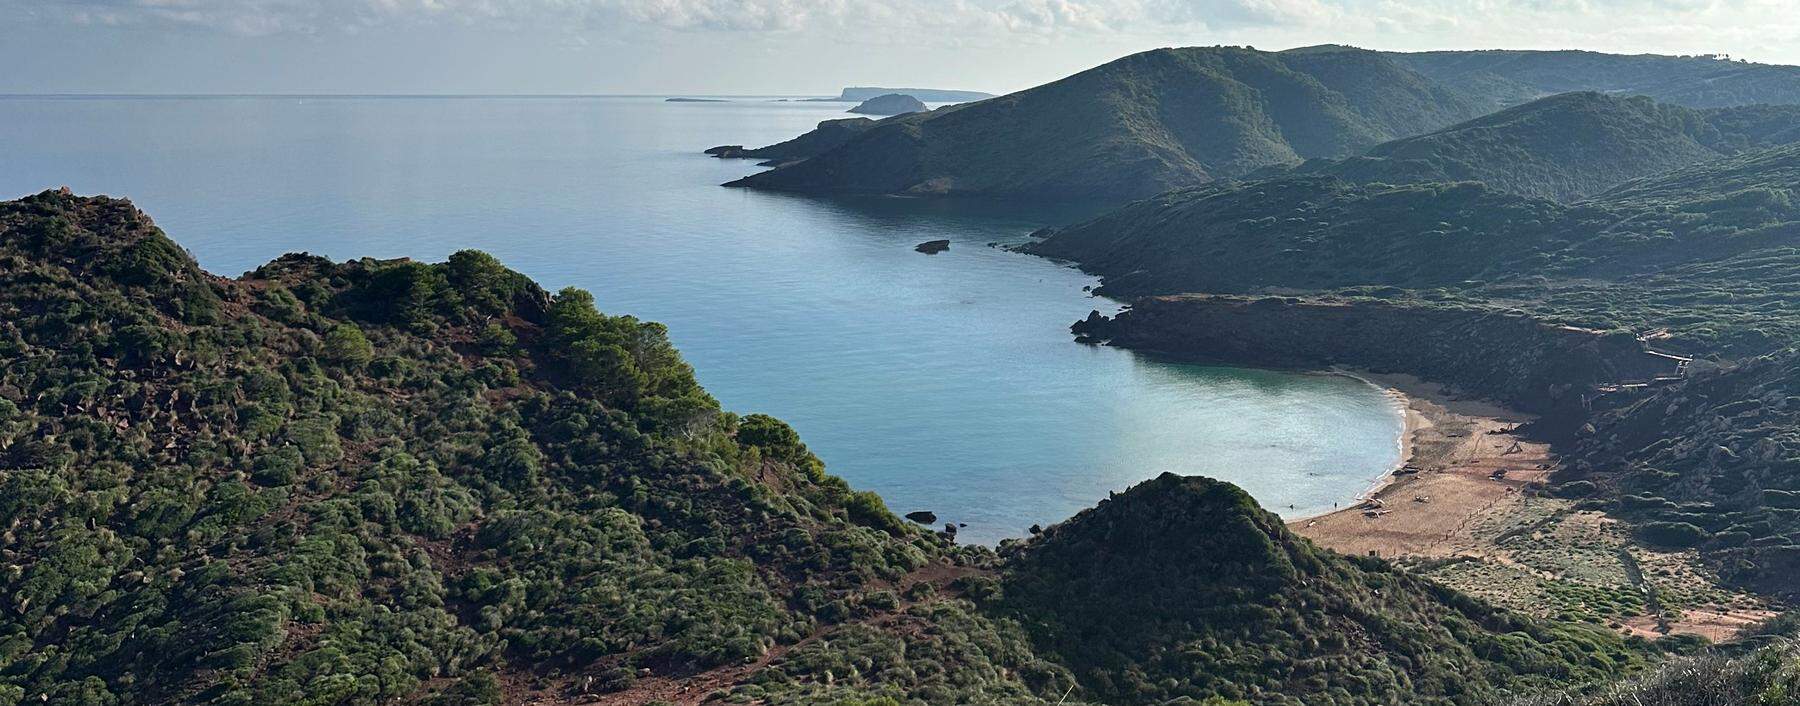 Im Gegensatz zu den anderen Balearen-Inseln hat Menorca die Ruhe weg.